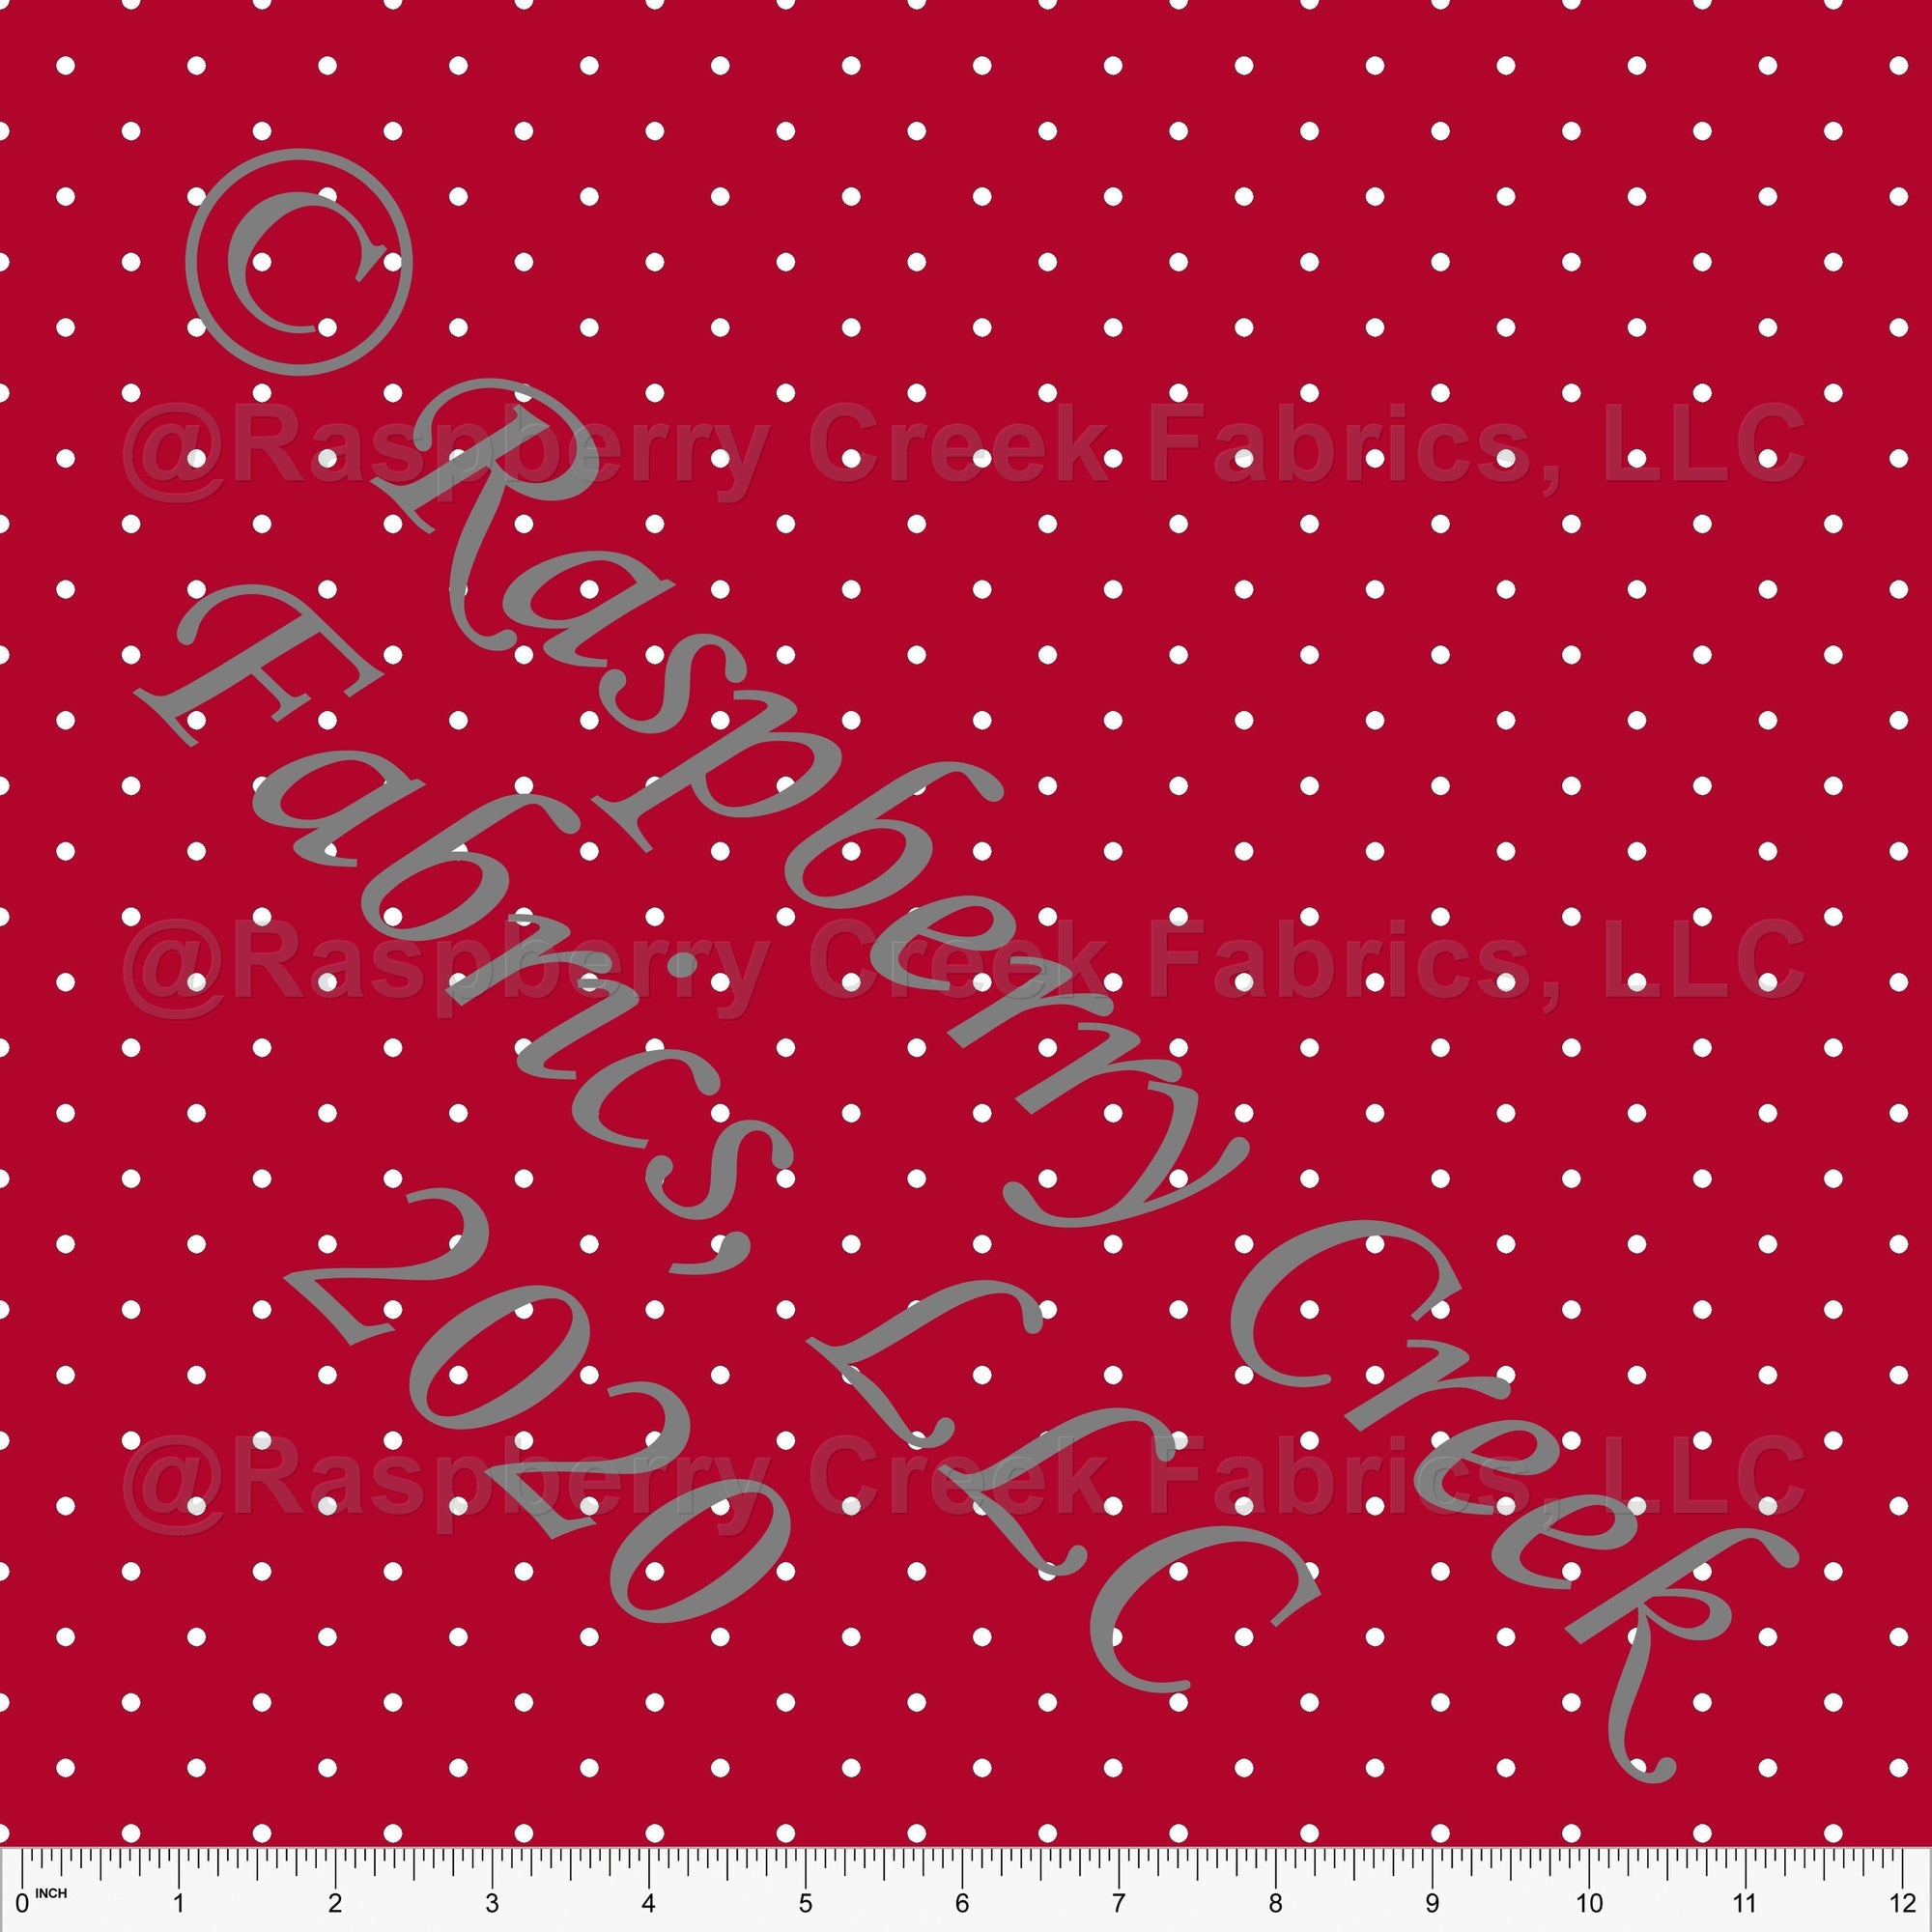 Red and White Pin Dot, Basics for CLUB Fabrics Fabric, Raspberry Creek Fabrics, watermarked